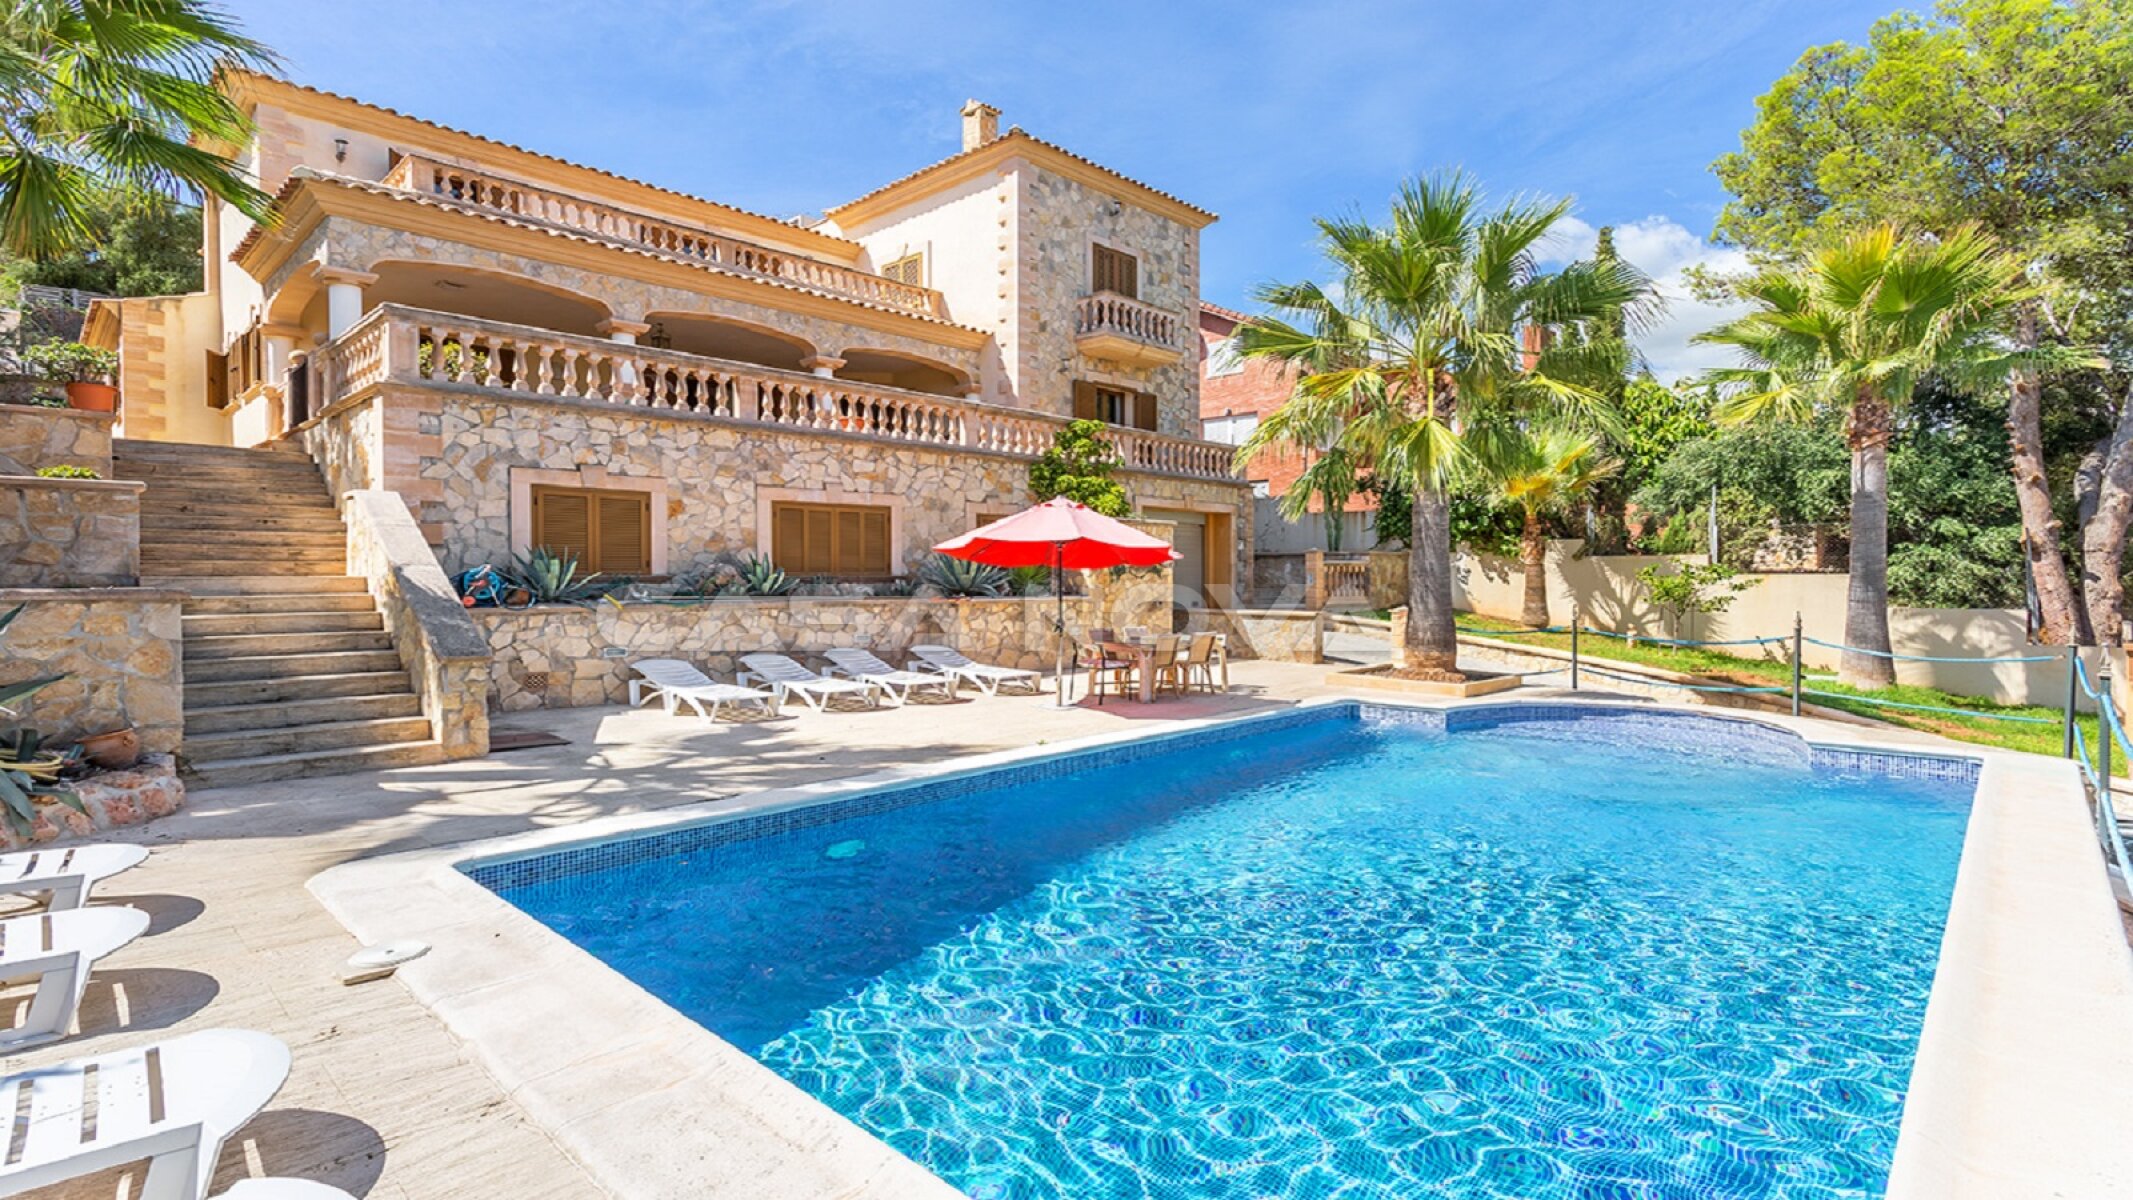 Mediterranean villa with pool in central location